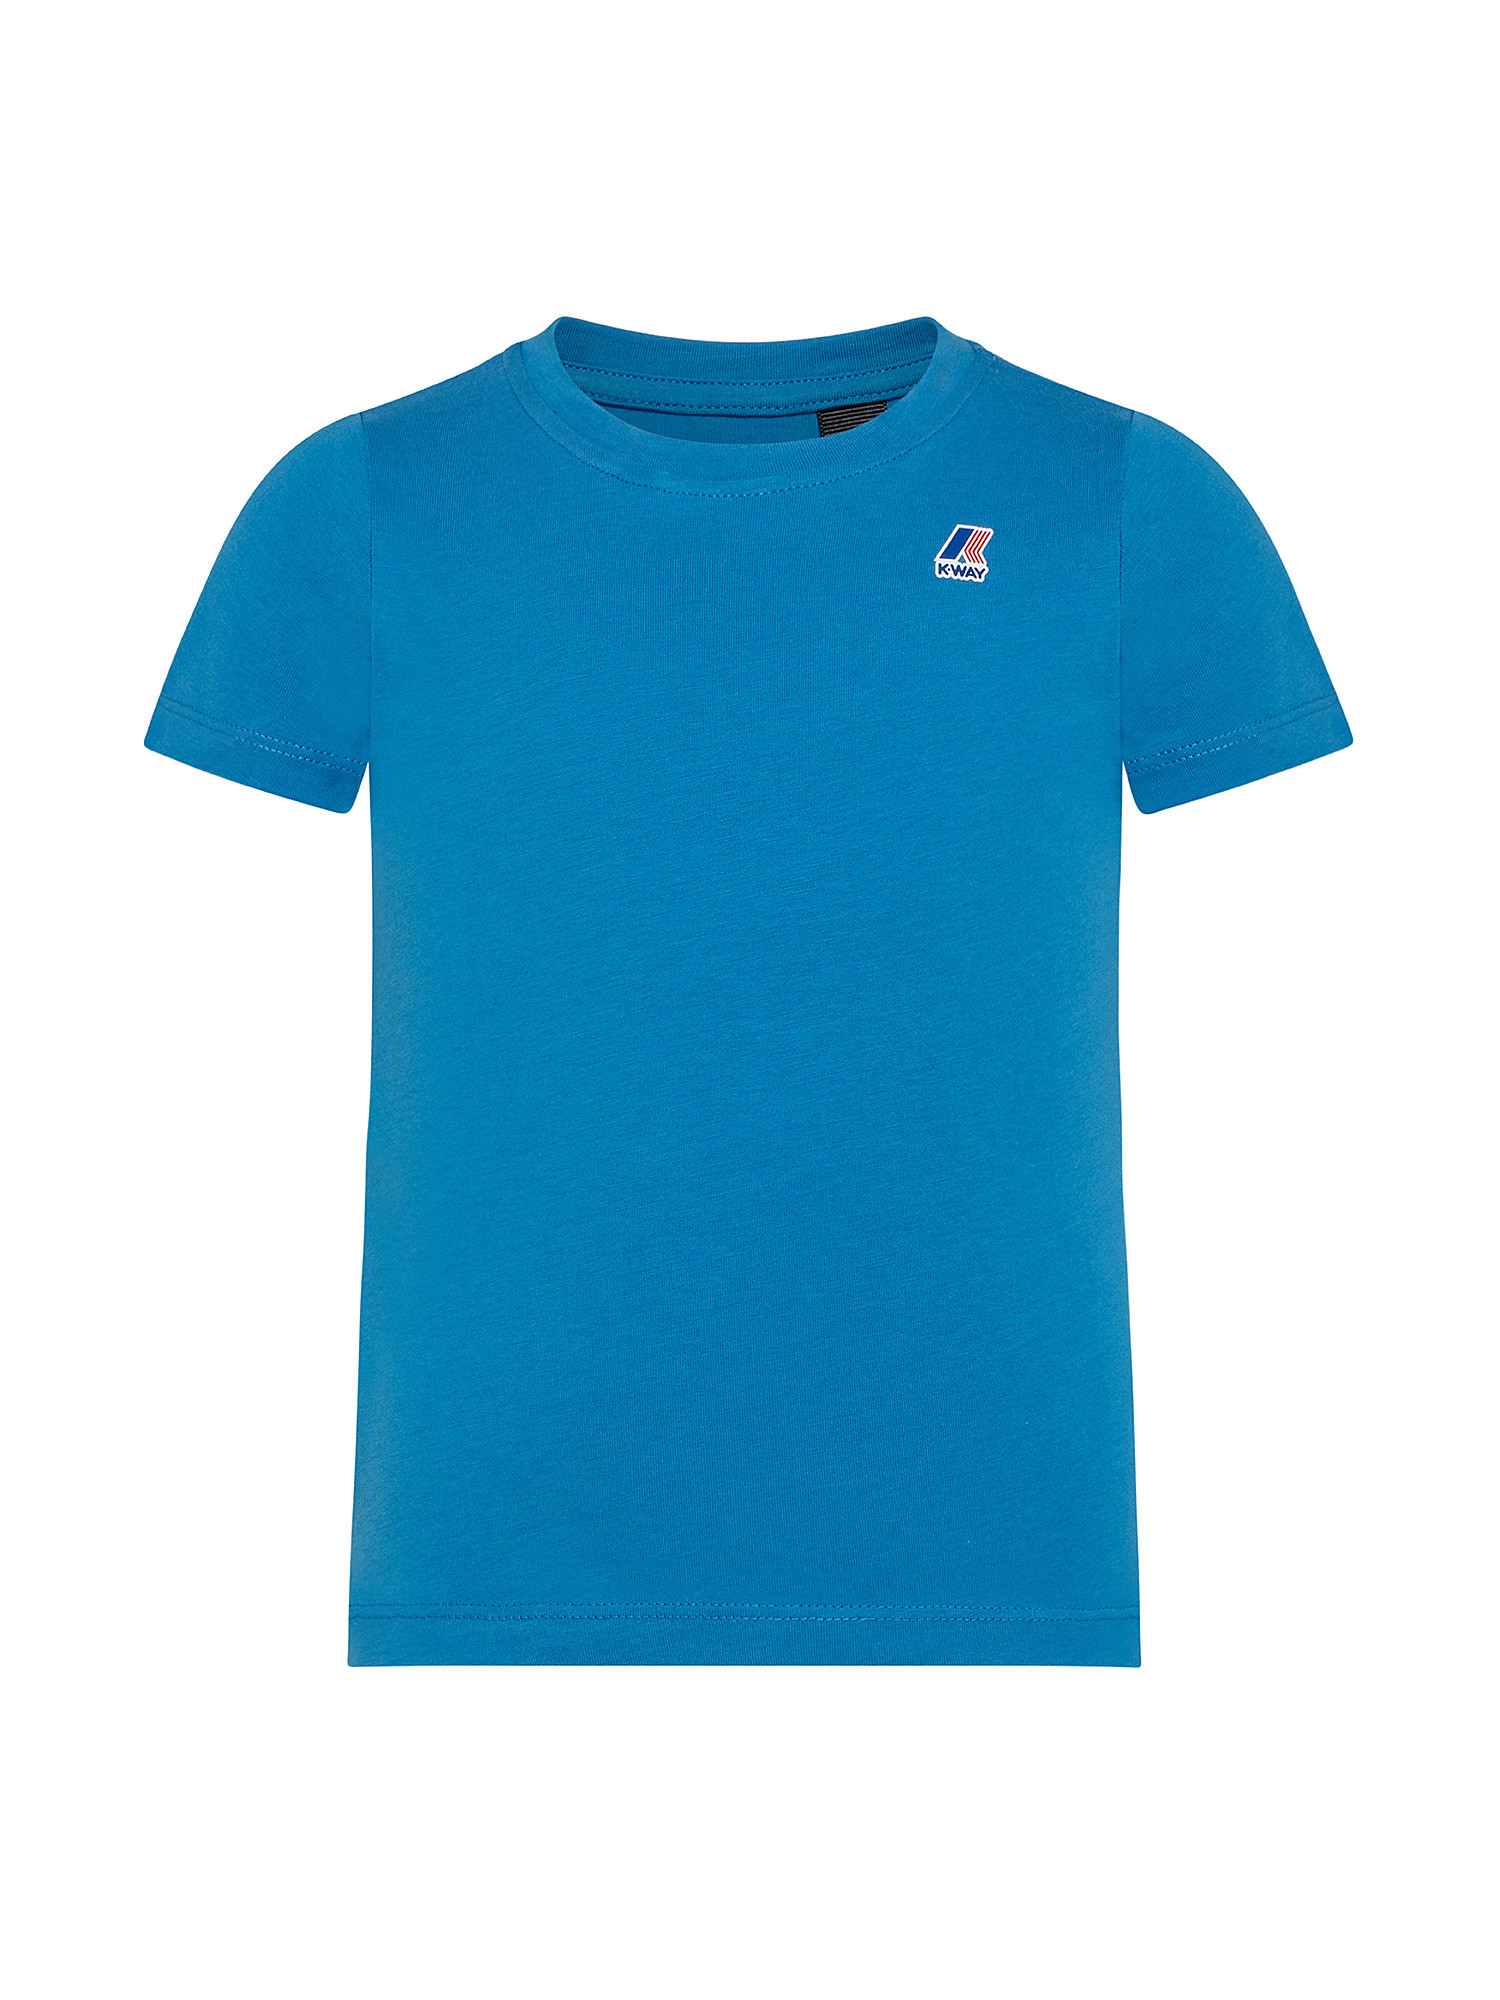 T-shirt bambino regular fit, Light Blue, large